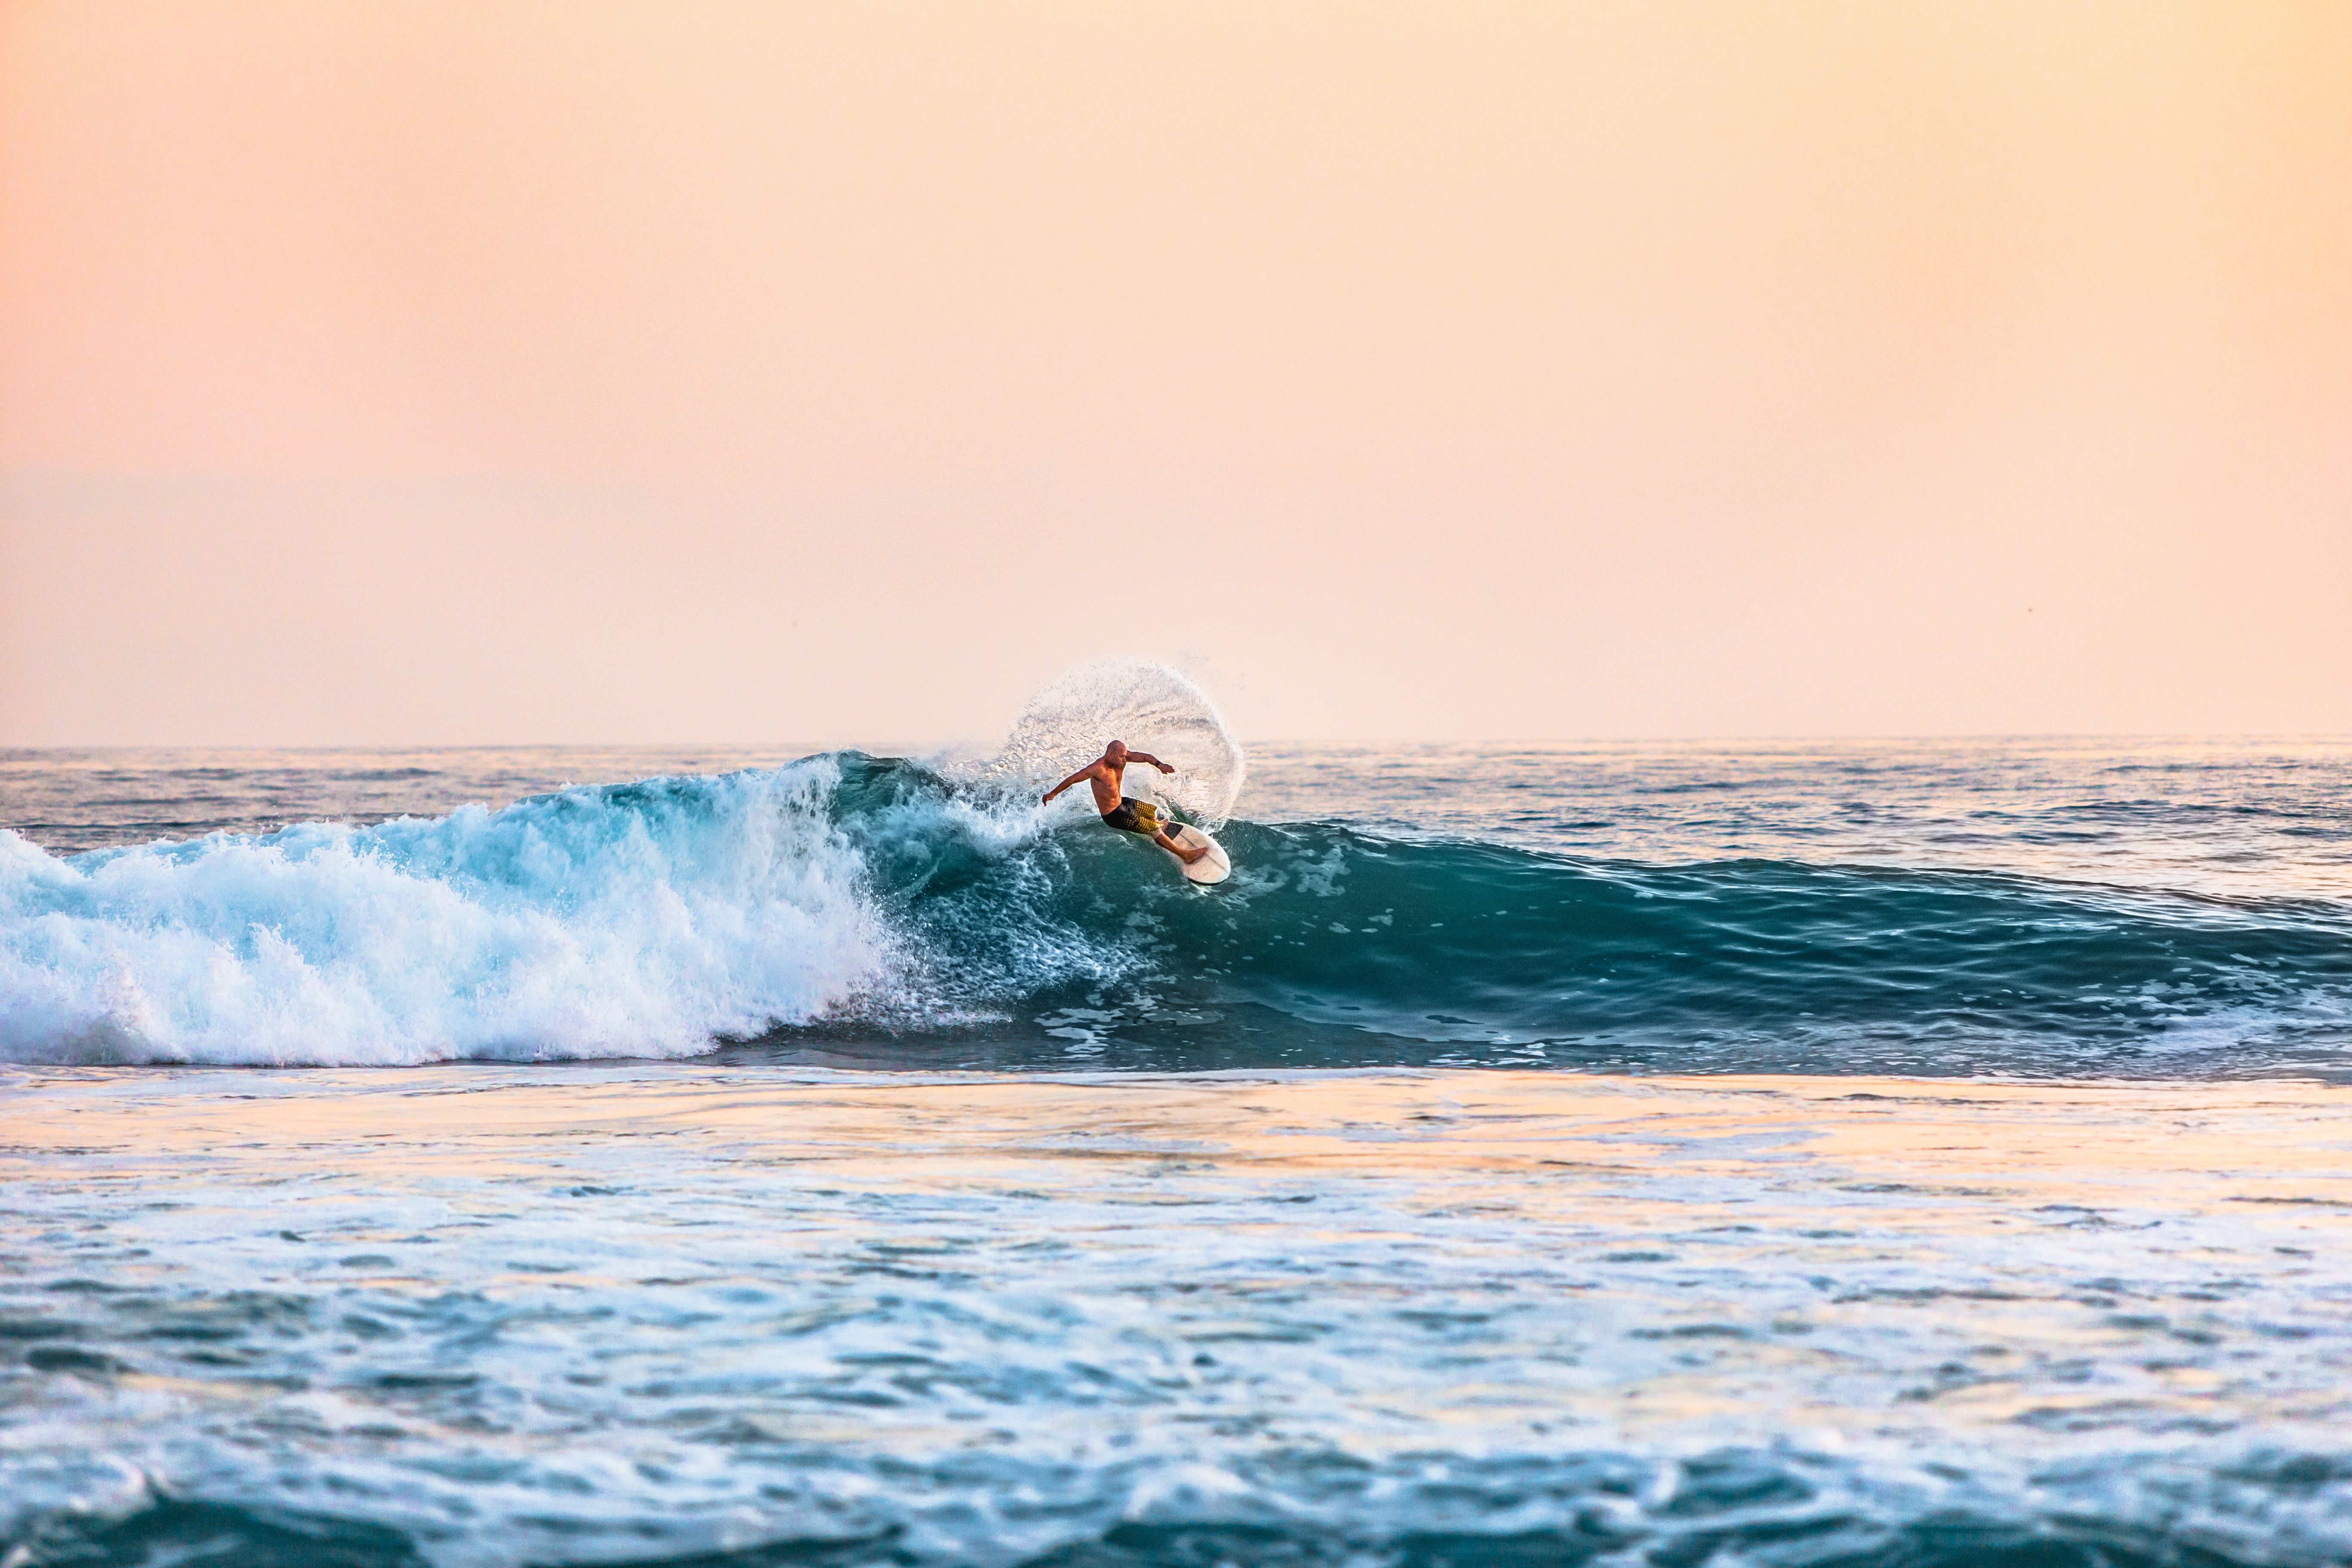 5472x3648 #wave, #surfer, #man, #summer wallpaper, #standing, #ocean, #surfboard, #riding the wave, #sand, #person, #sport, #summer background, #spray, #wallpaper, #Creative Commons image, #surfing, #splash, #foam, #water, #male, #sea